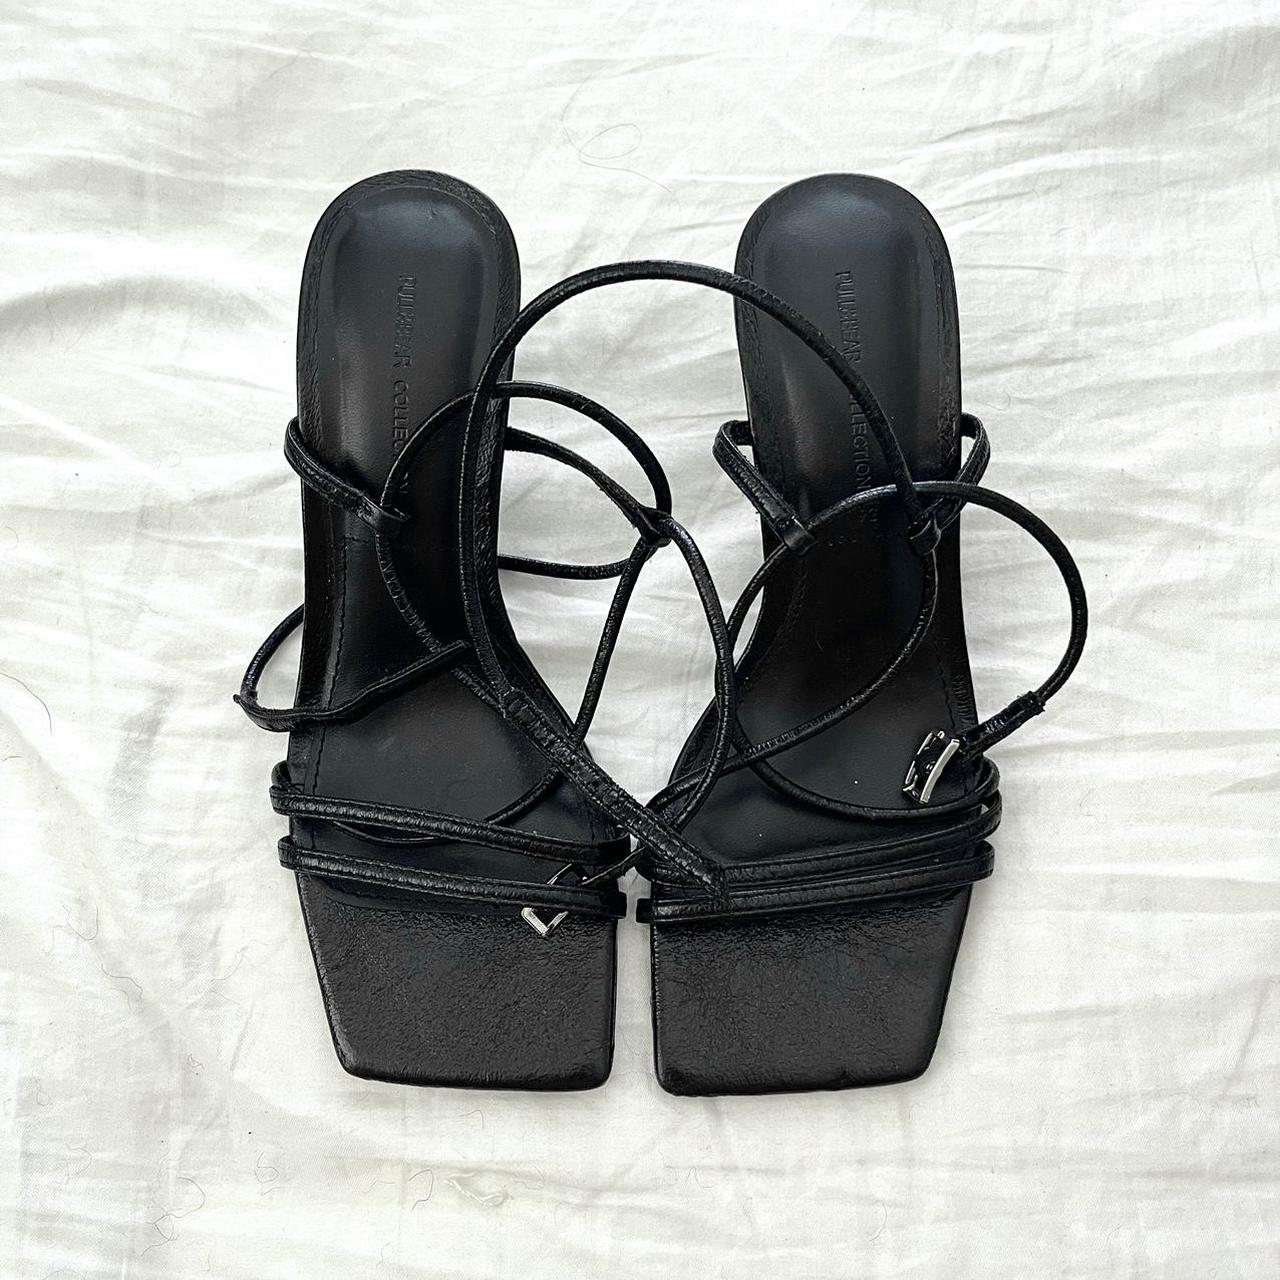 Black Strappy Heels Bought in Spain last summer,... - Depop